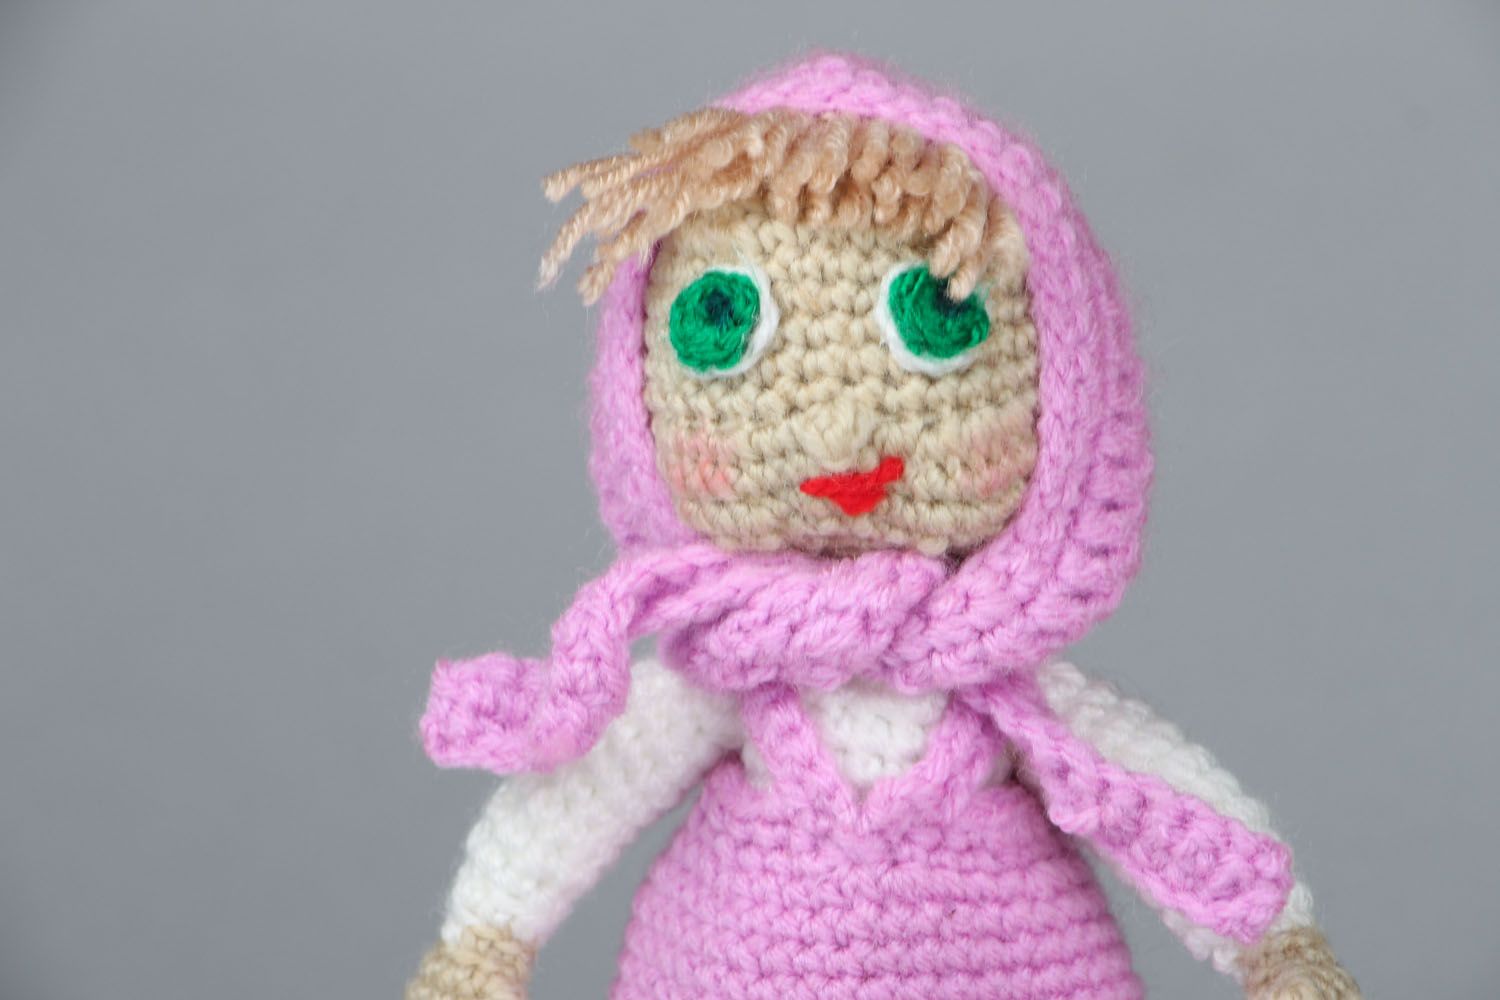 Handmade crochet doll photo 2